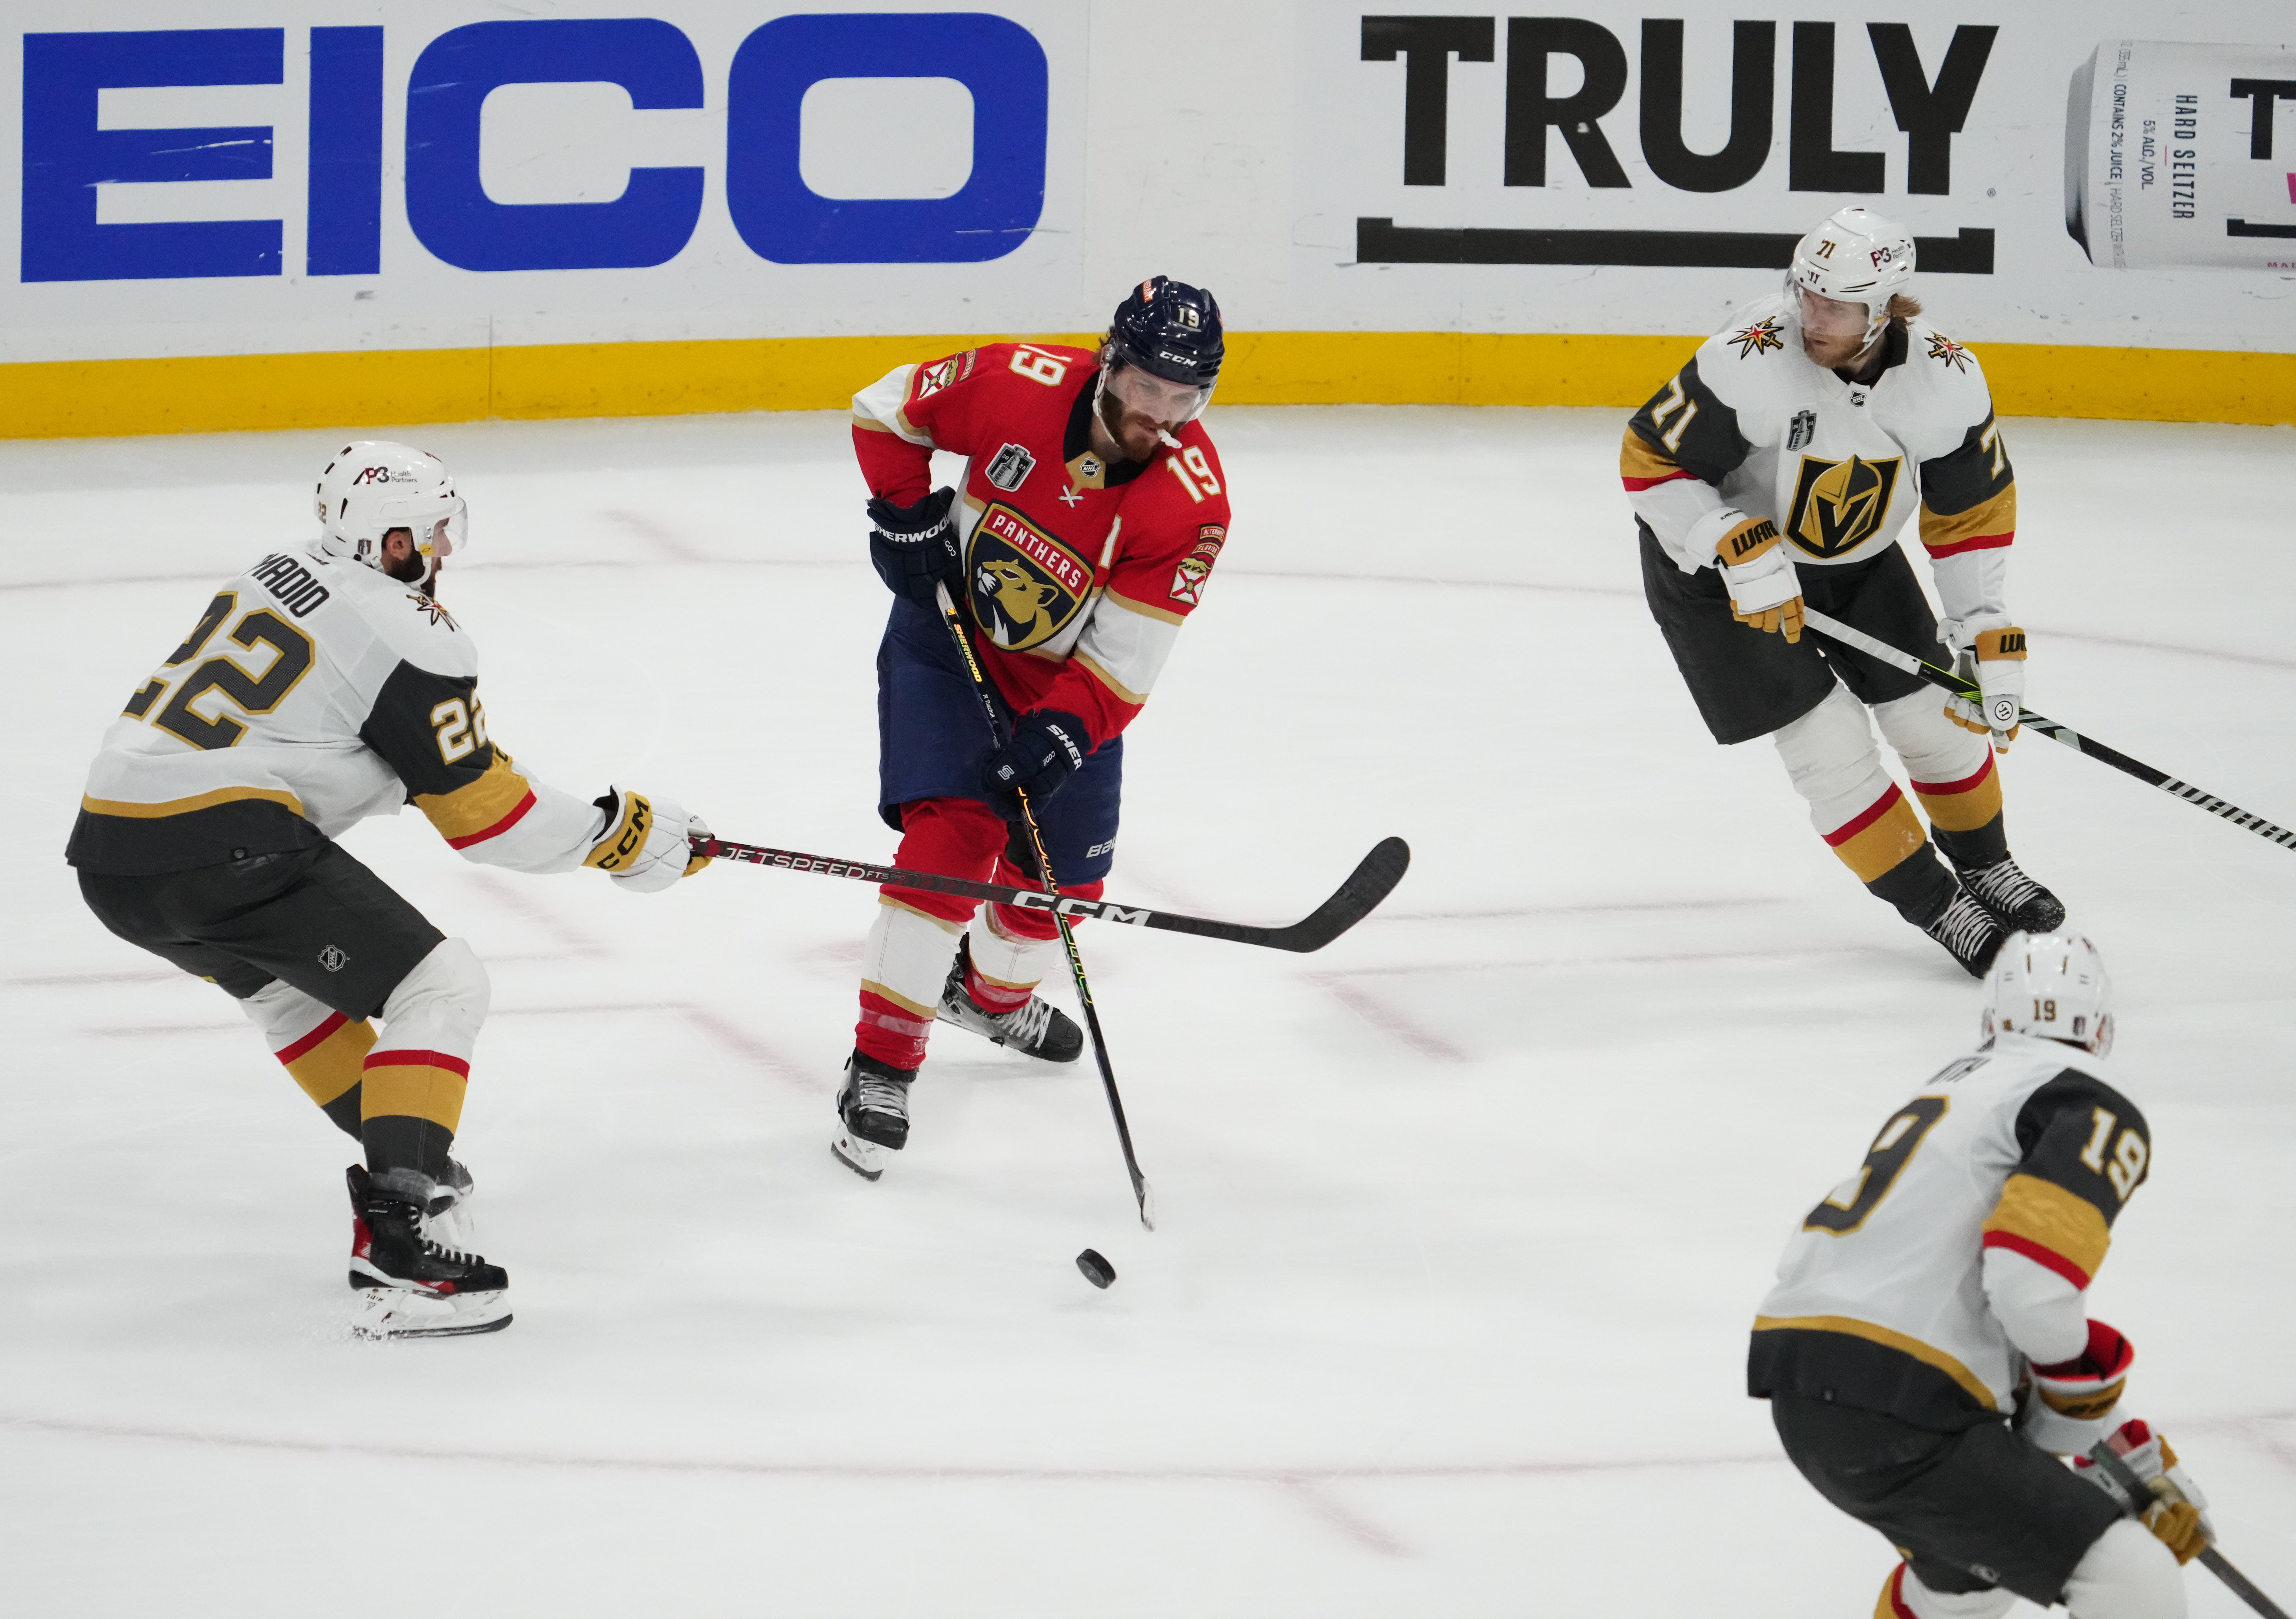 Stanley Cup Final between Golden Knights, Panthers begins June 3 on  Sportsnet